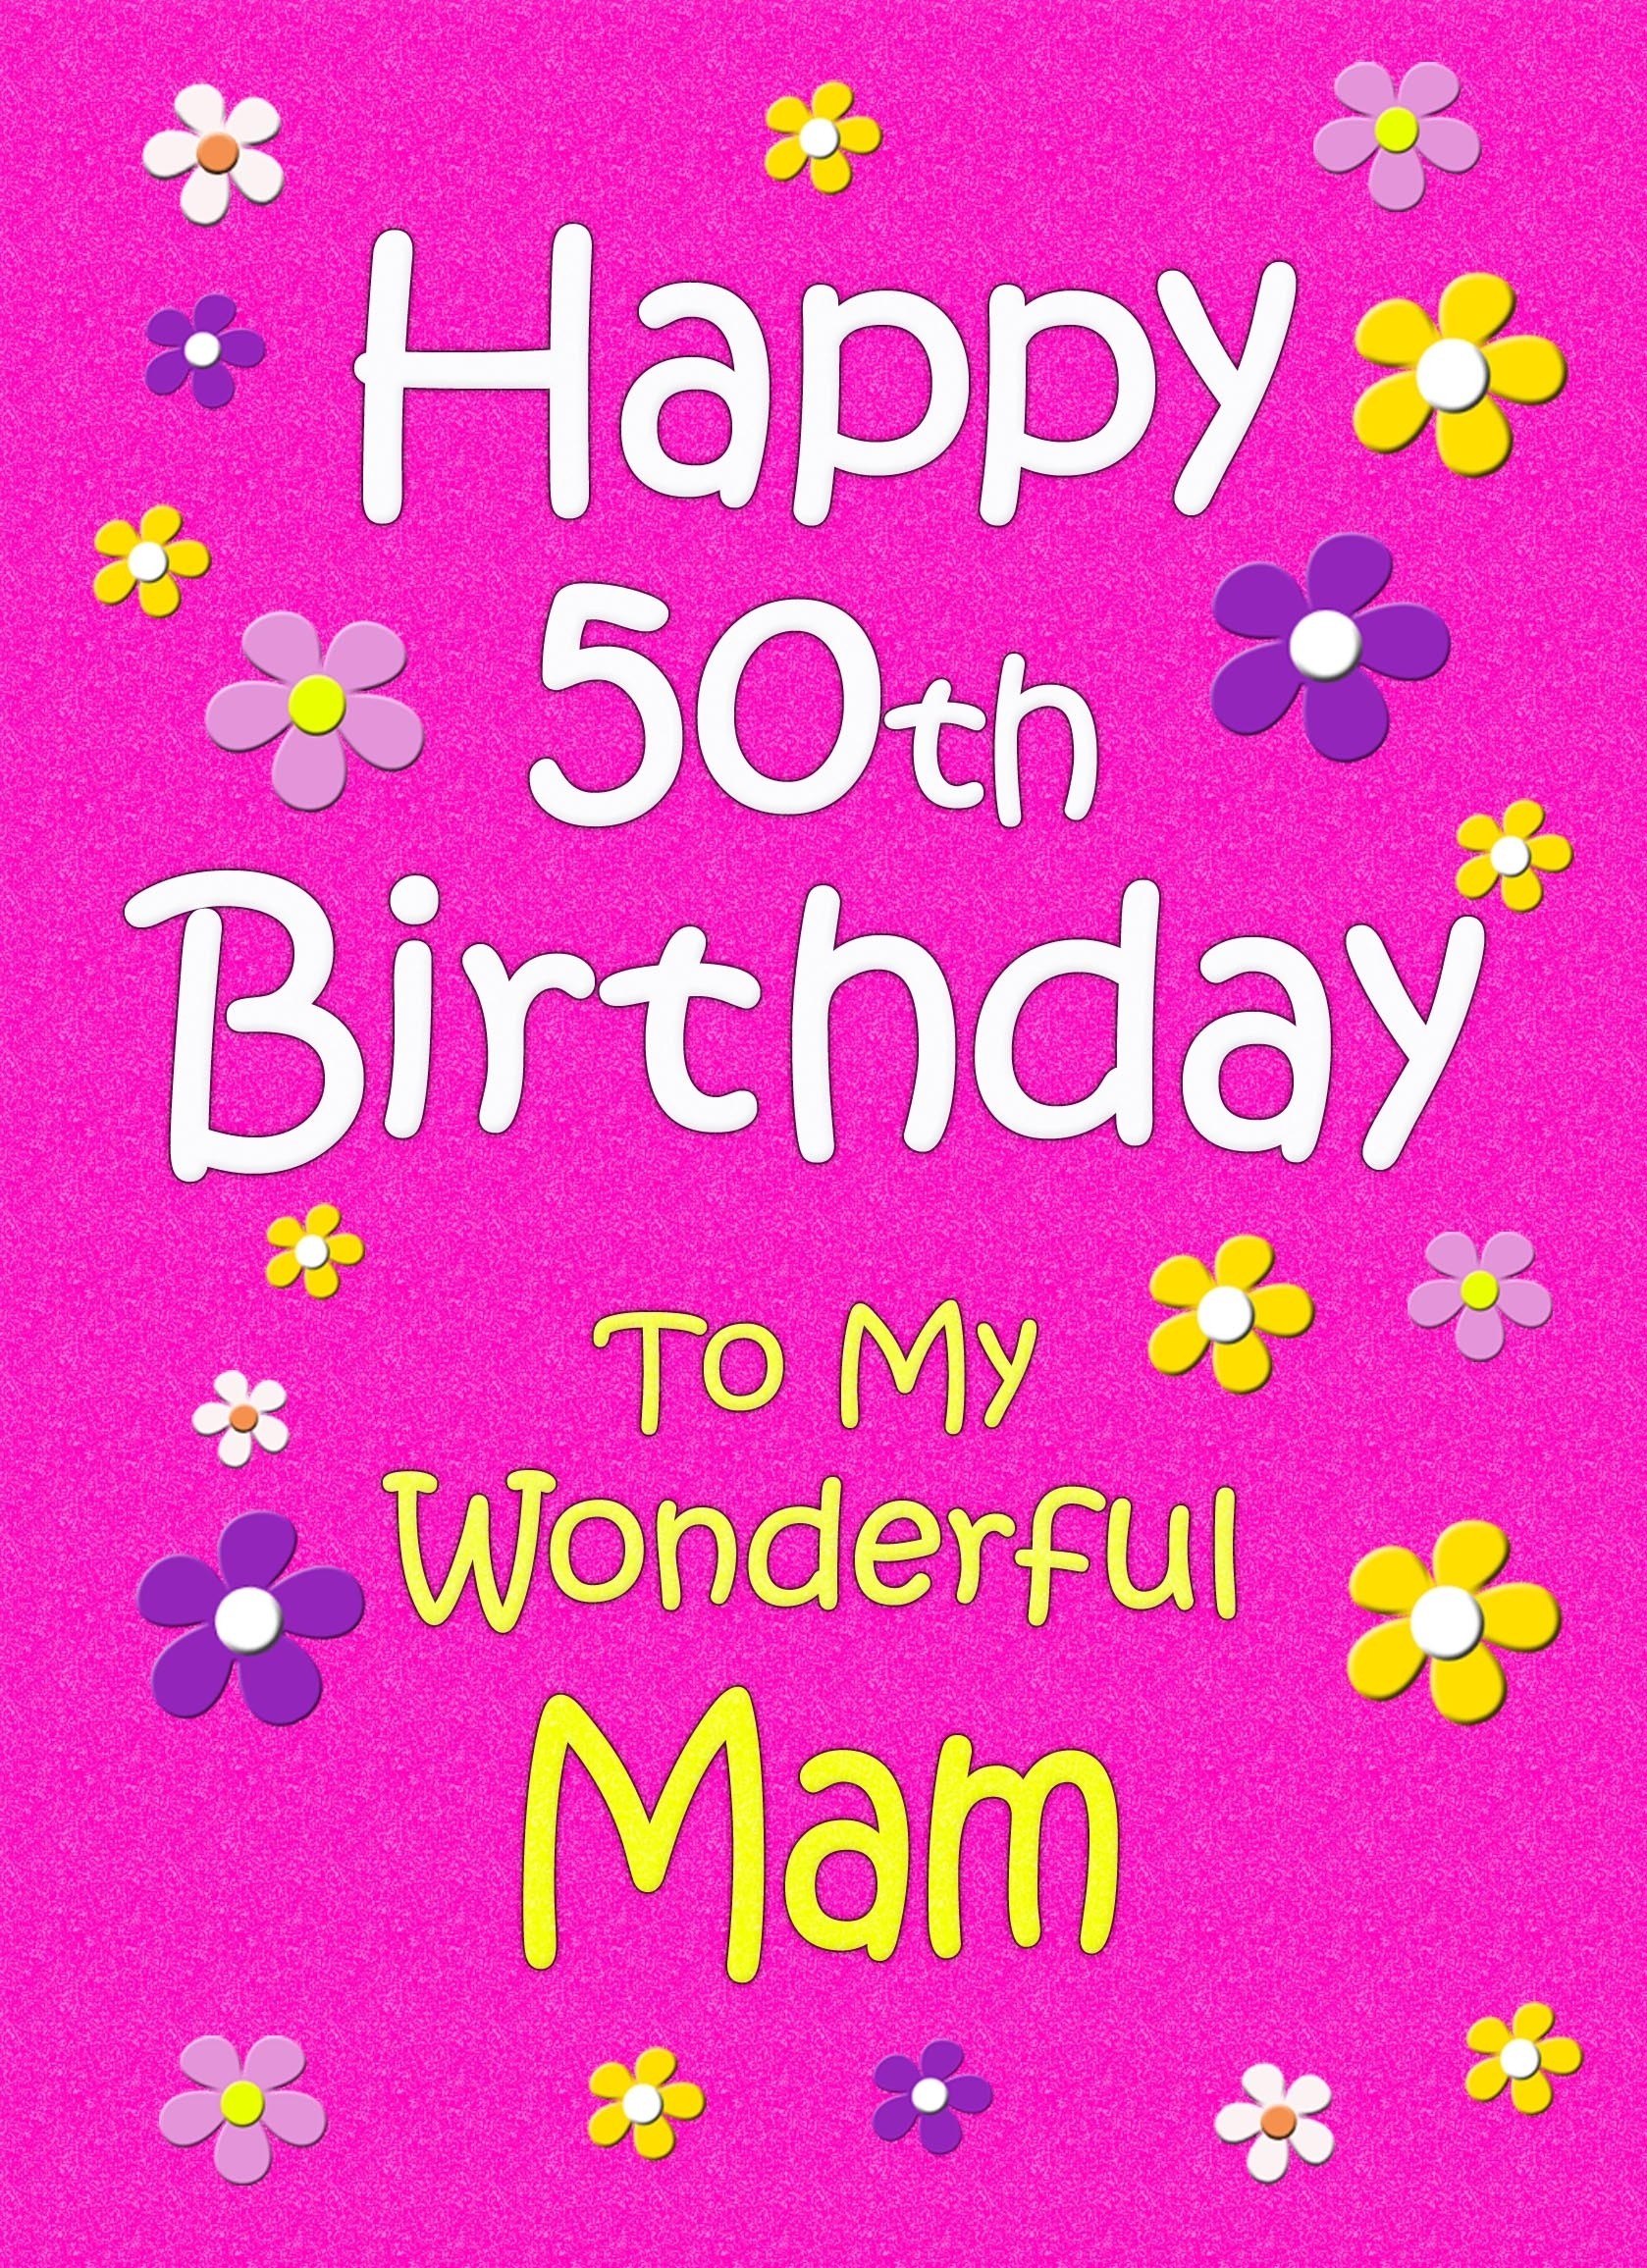 Mam 50th Birthday Card (Pink)